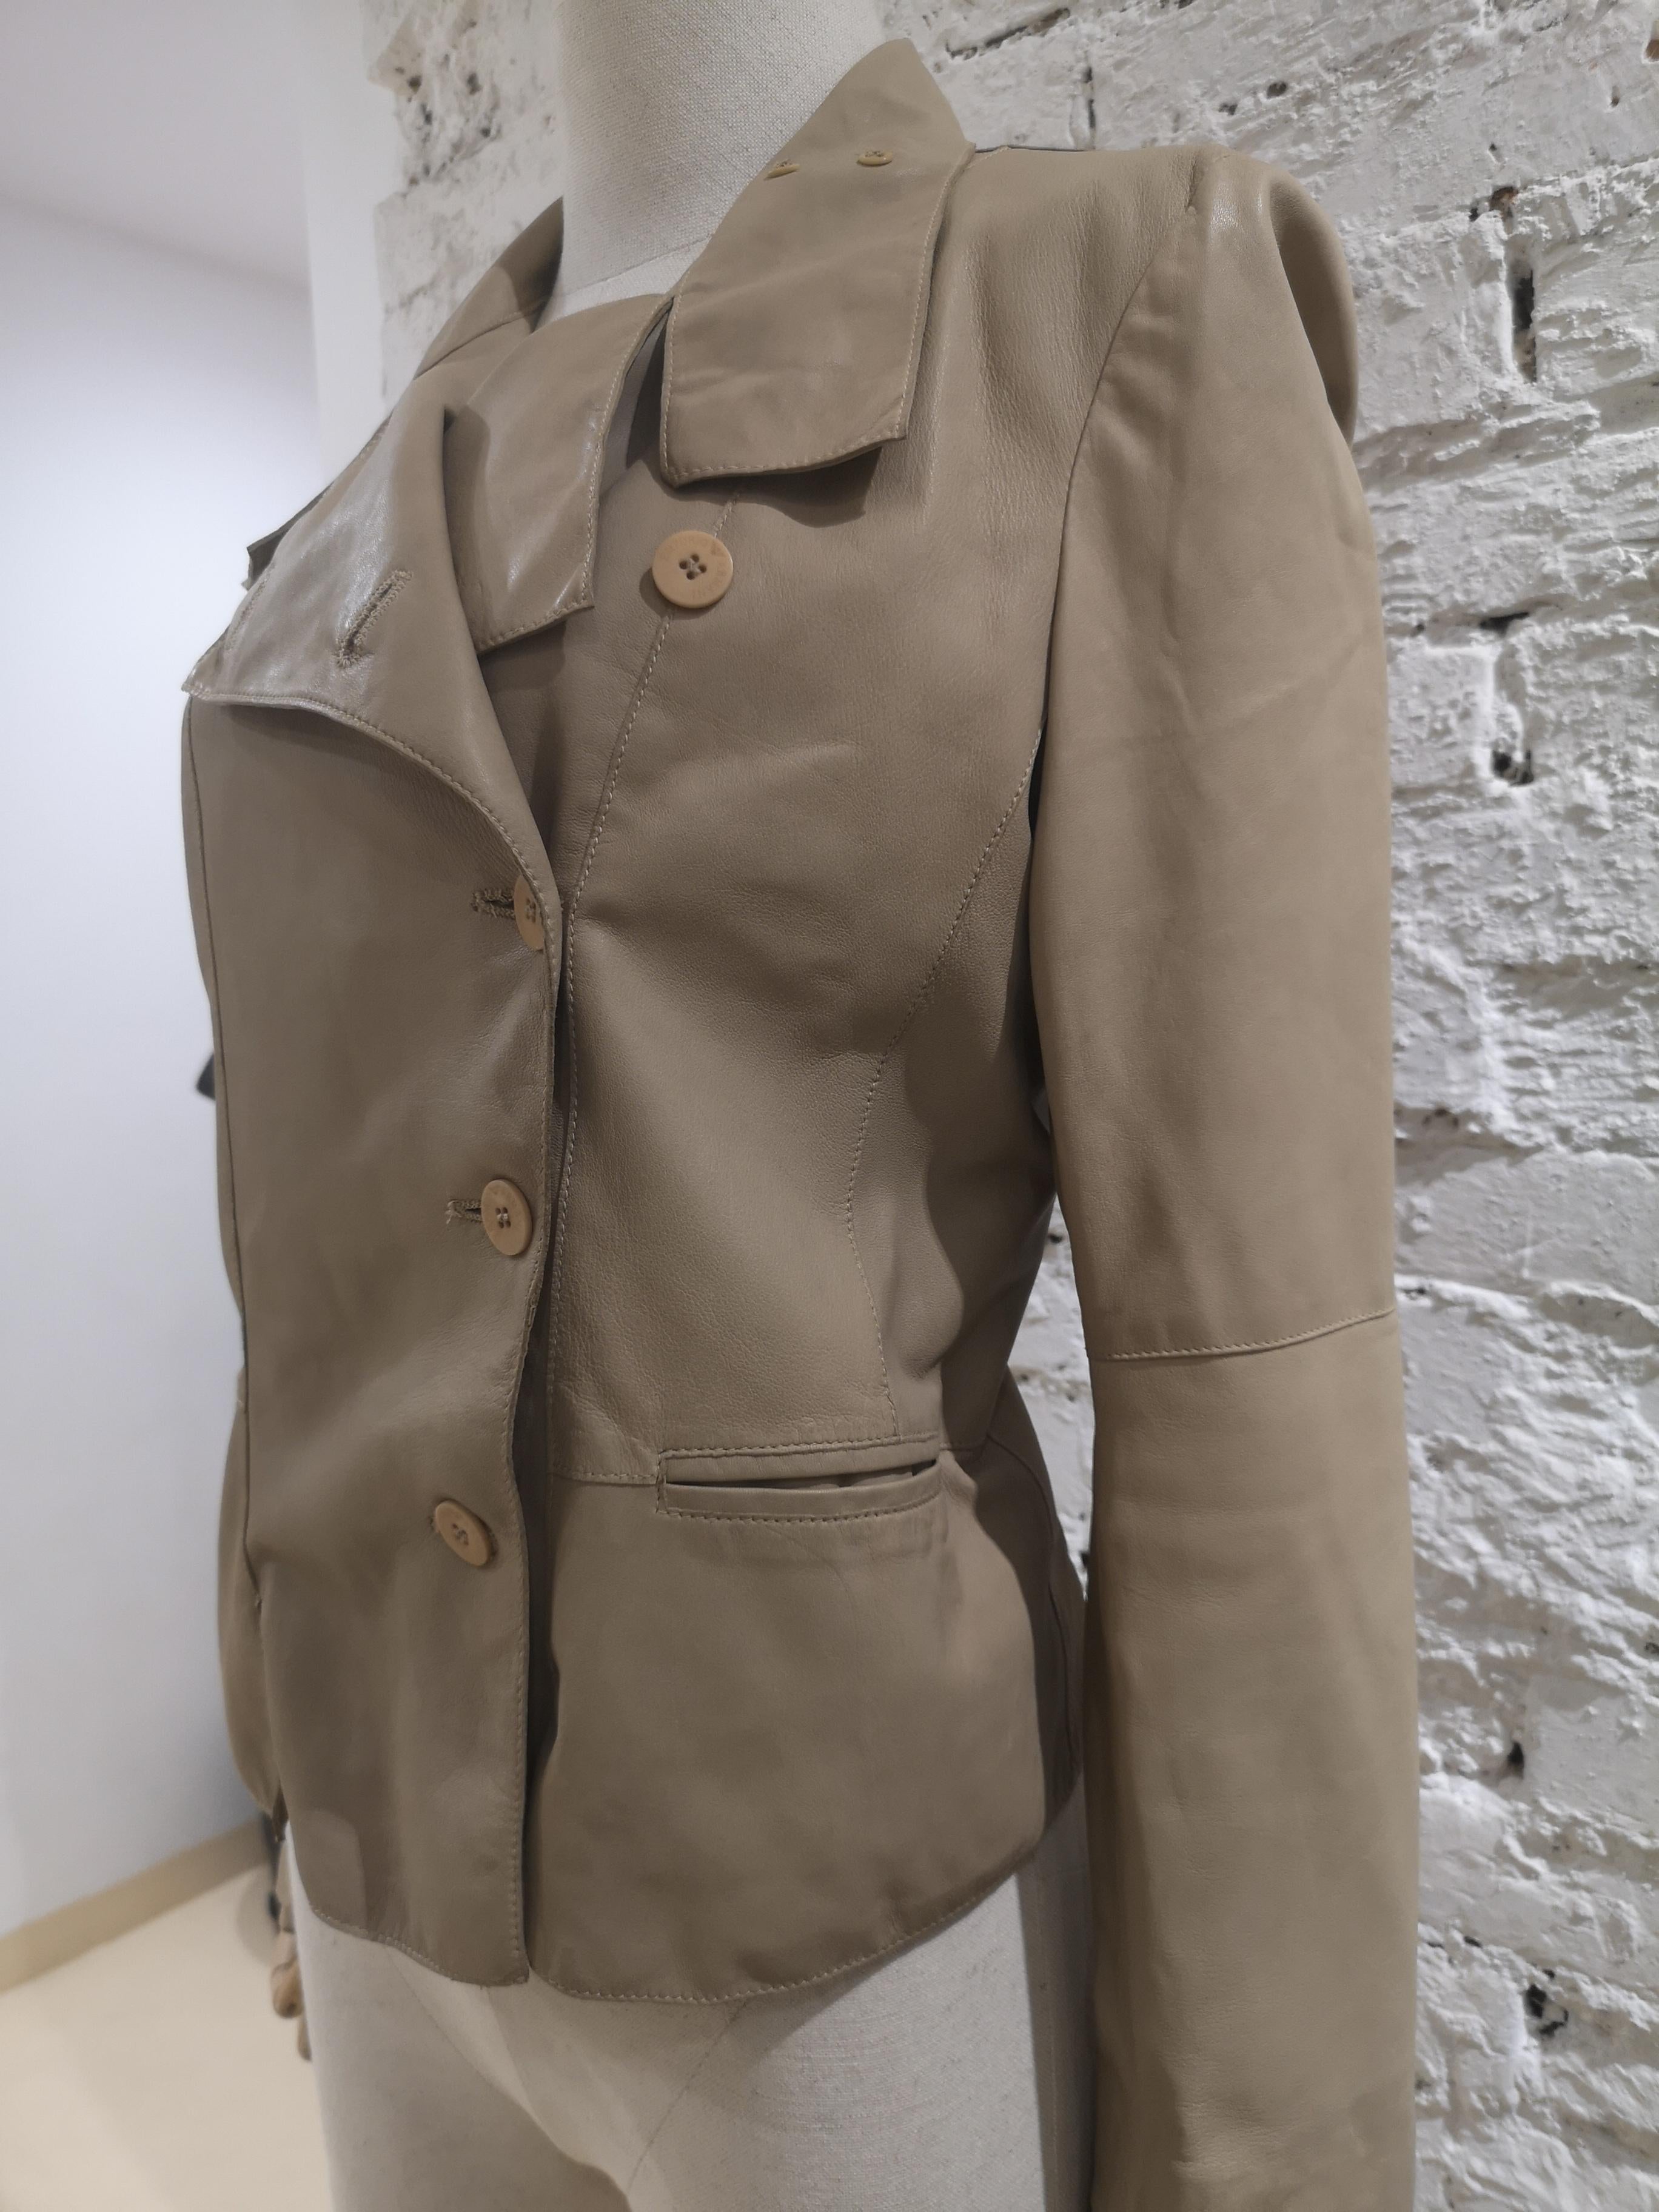 Giorgio Armani beige leather jacket In Excellent Condition For Sale In Capri, IT